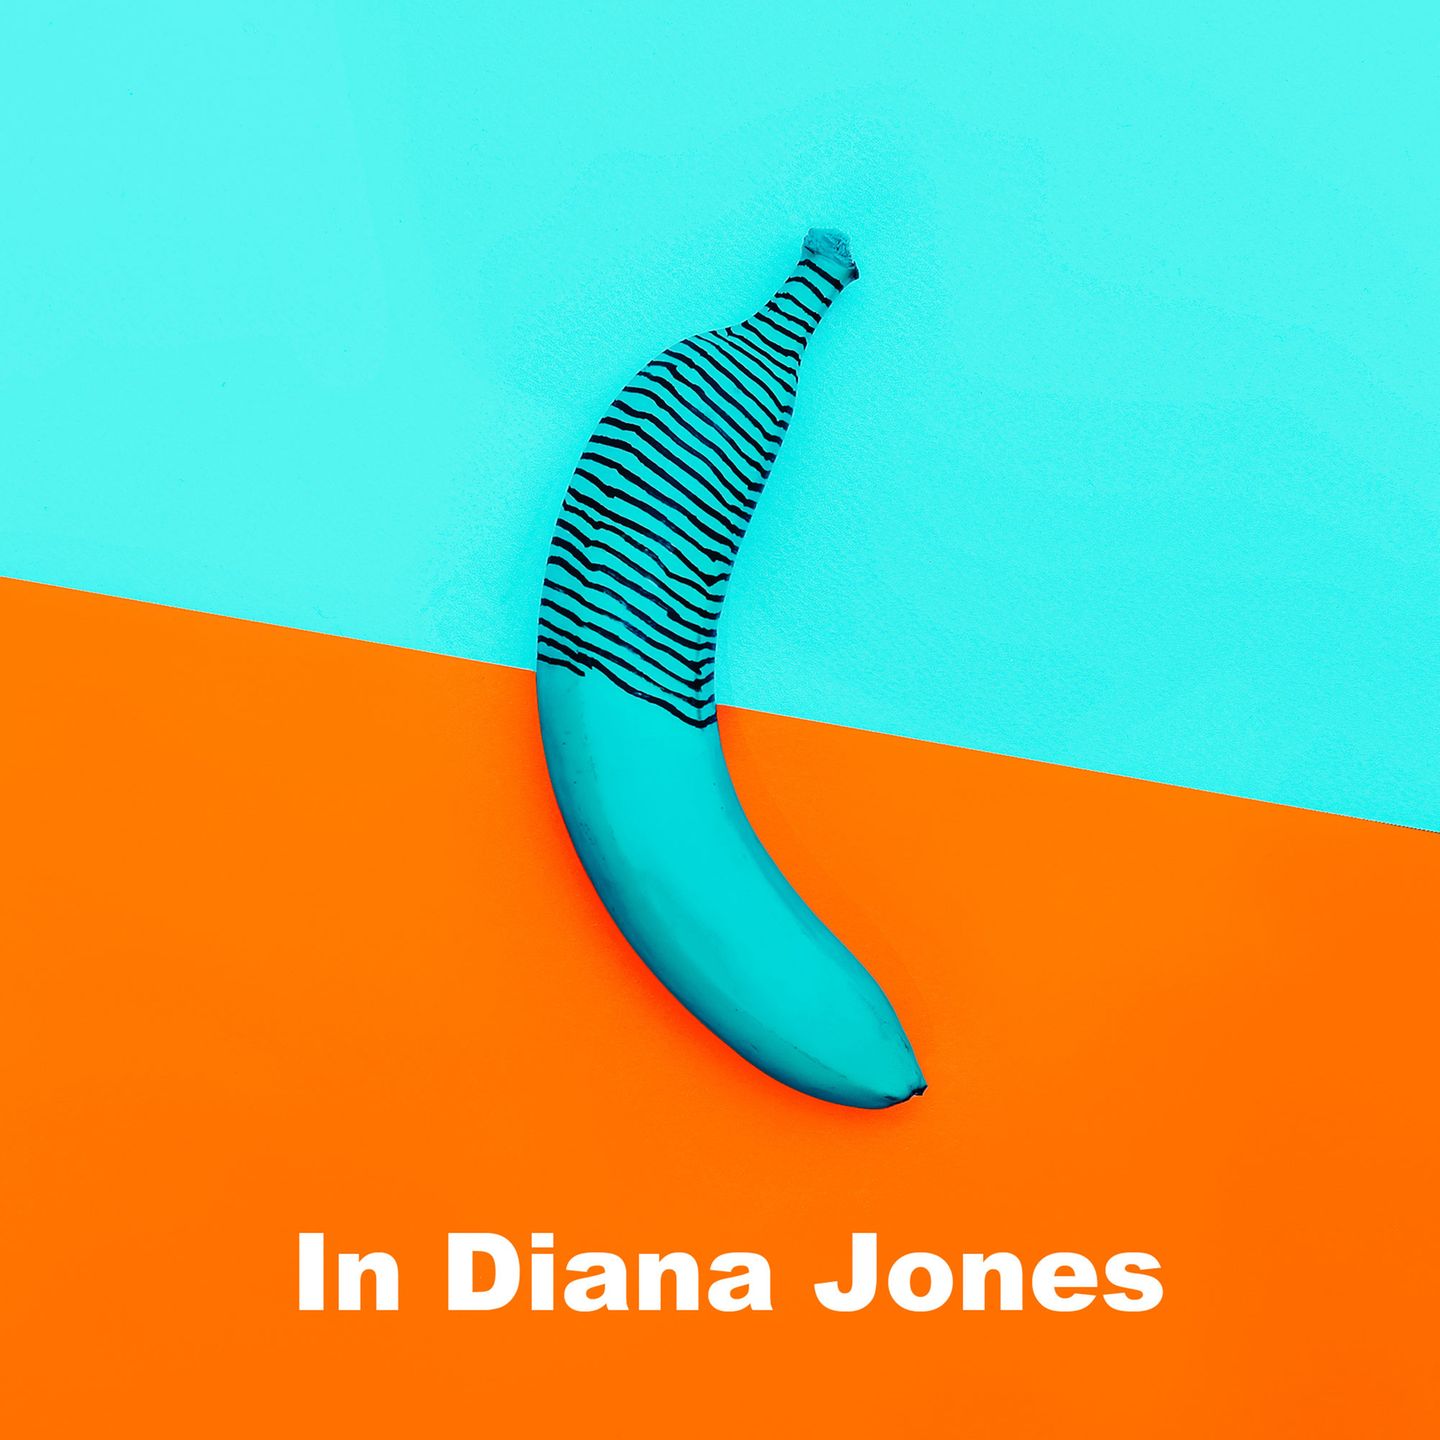 Lustige Pornotitel: Banane mit Pornotitel "In Diana Jones"